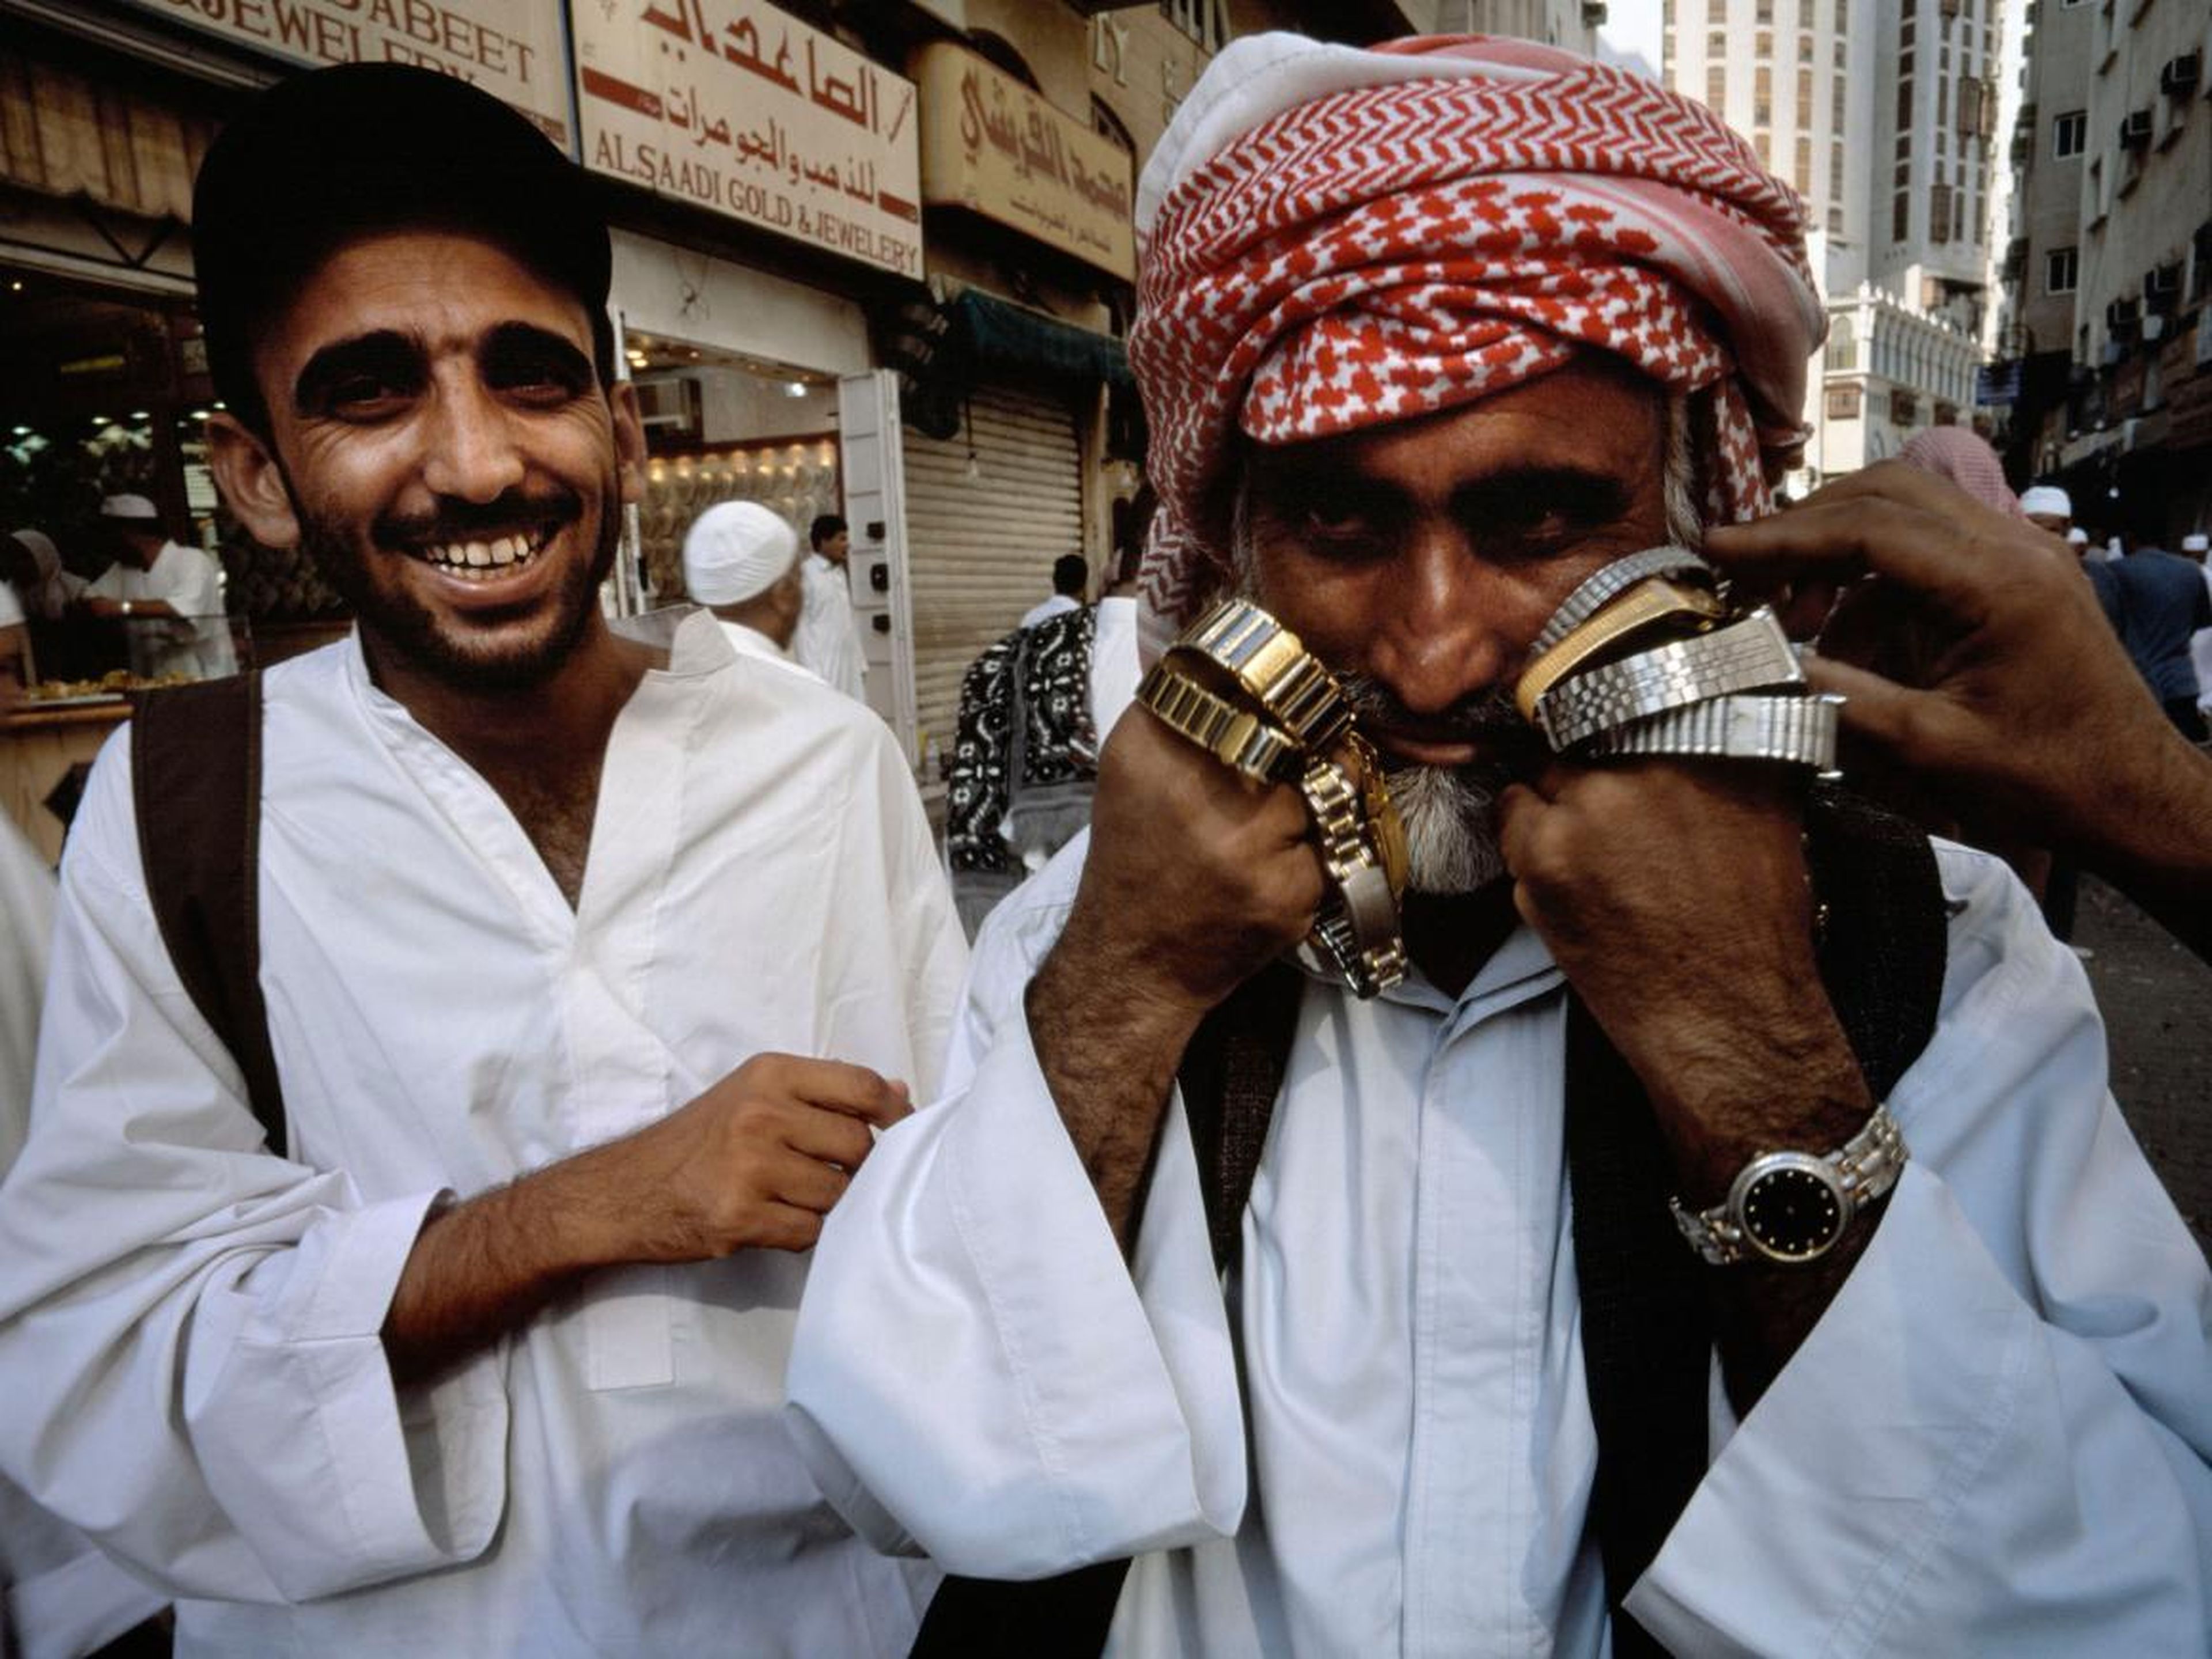 Vendedor ambulante de relojes en La Meca.